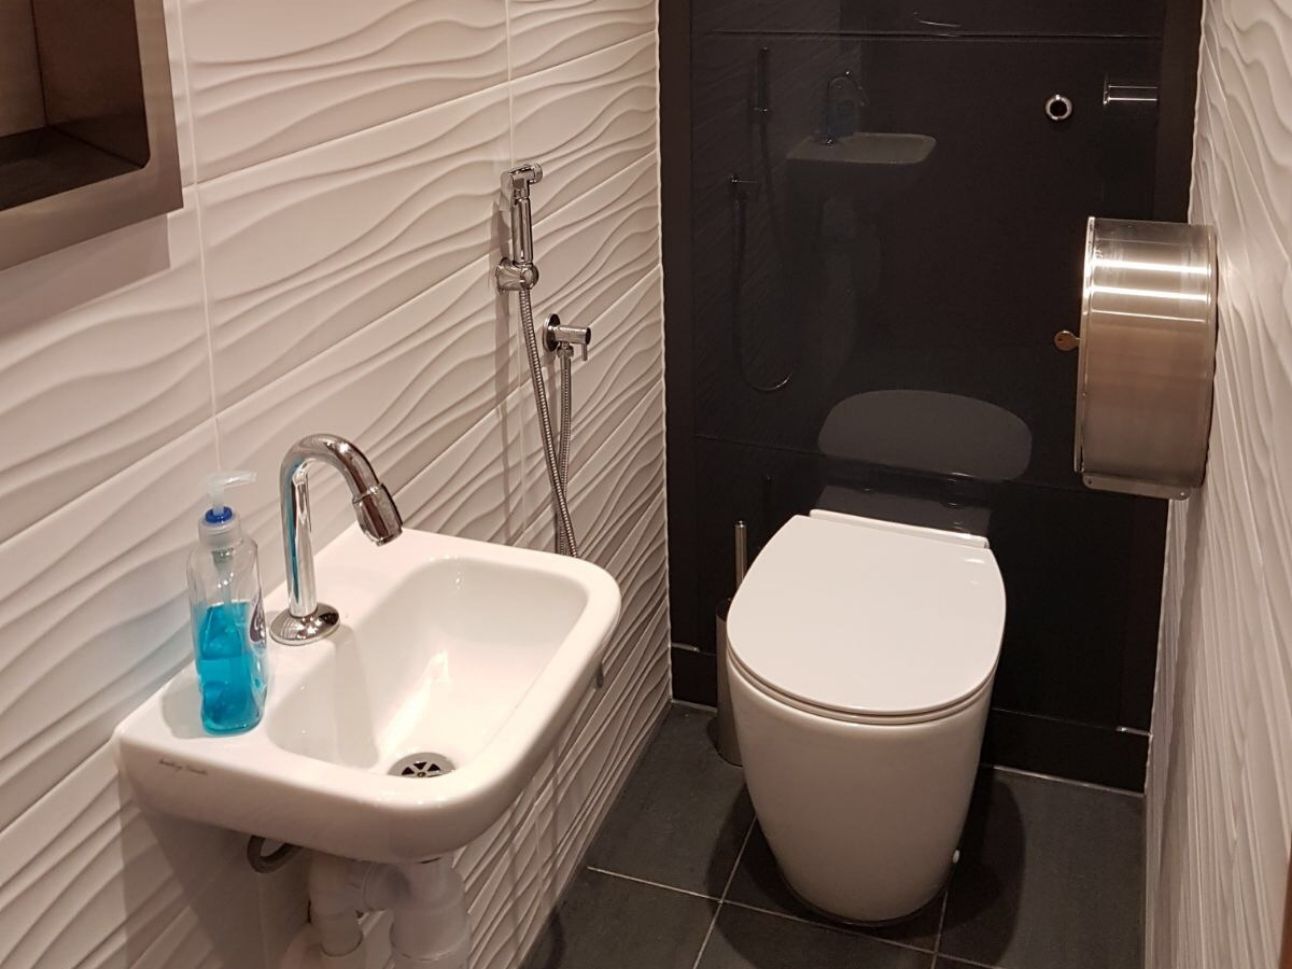 London Office Washroom Refurbishment | Commercial Washrooms